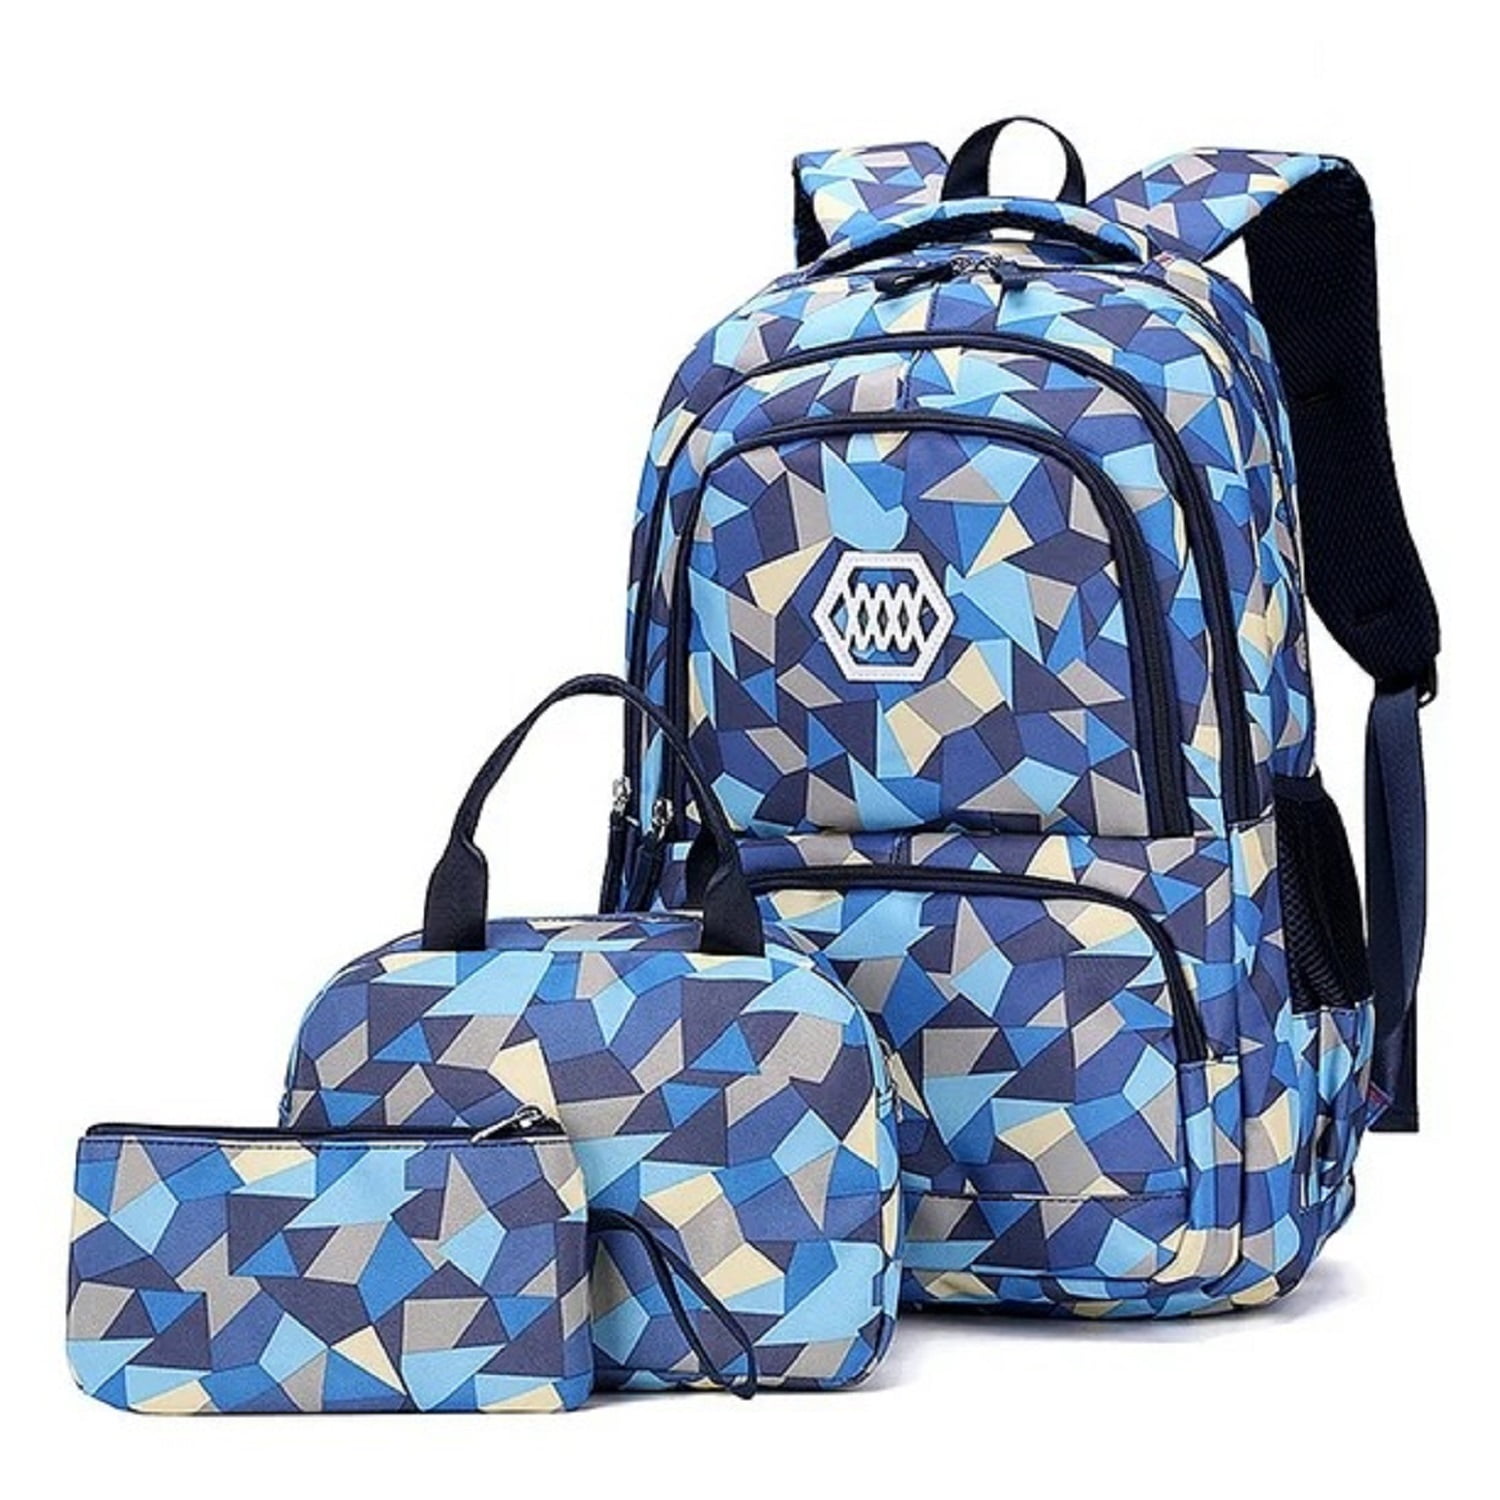 Vbiger Fashion School Backpack for Teen Boys Girls, Student Backpack ...